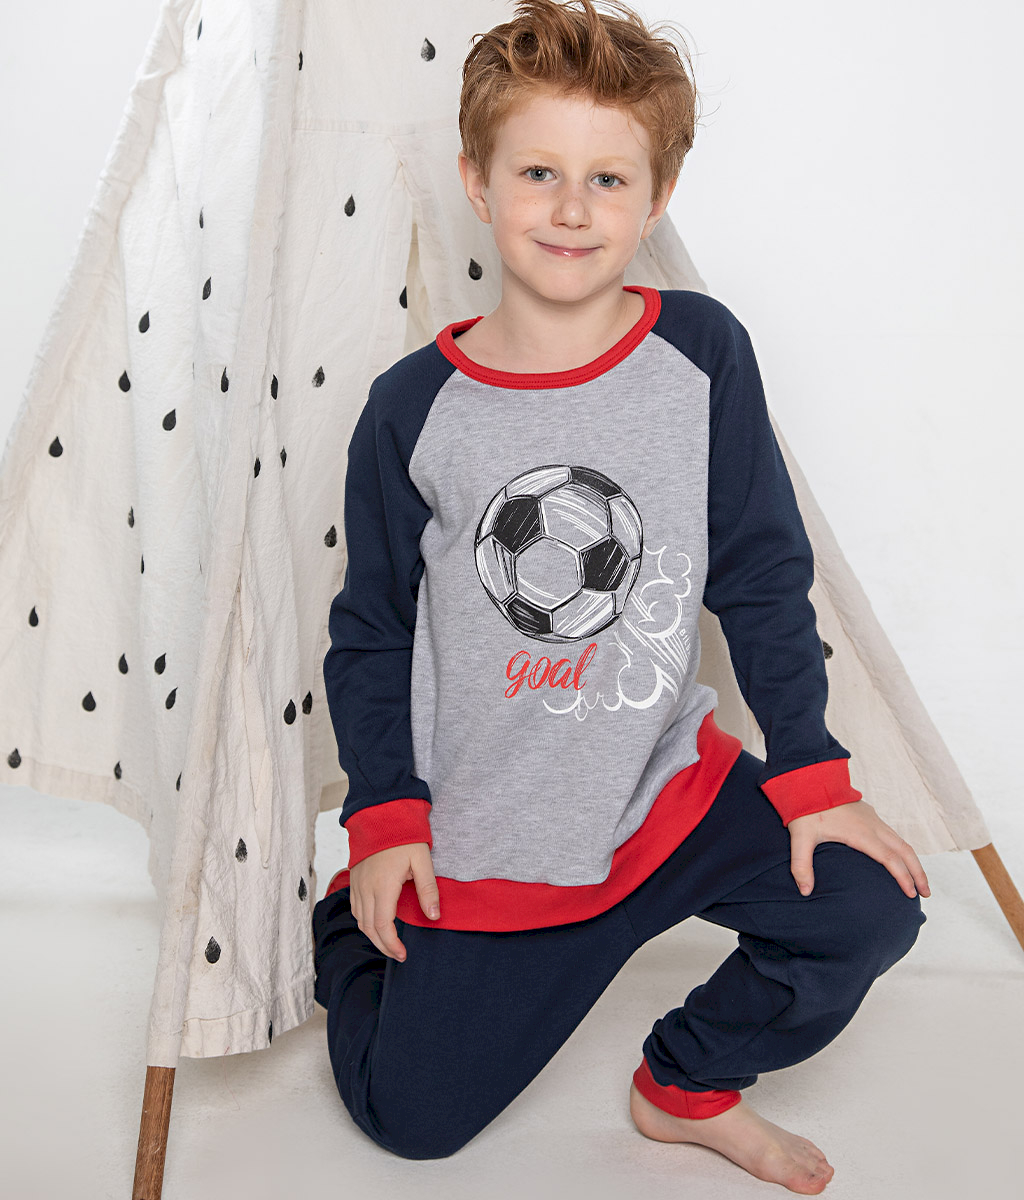 Pijama Mateo Boy Talle especial - Lenceria Moda